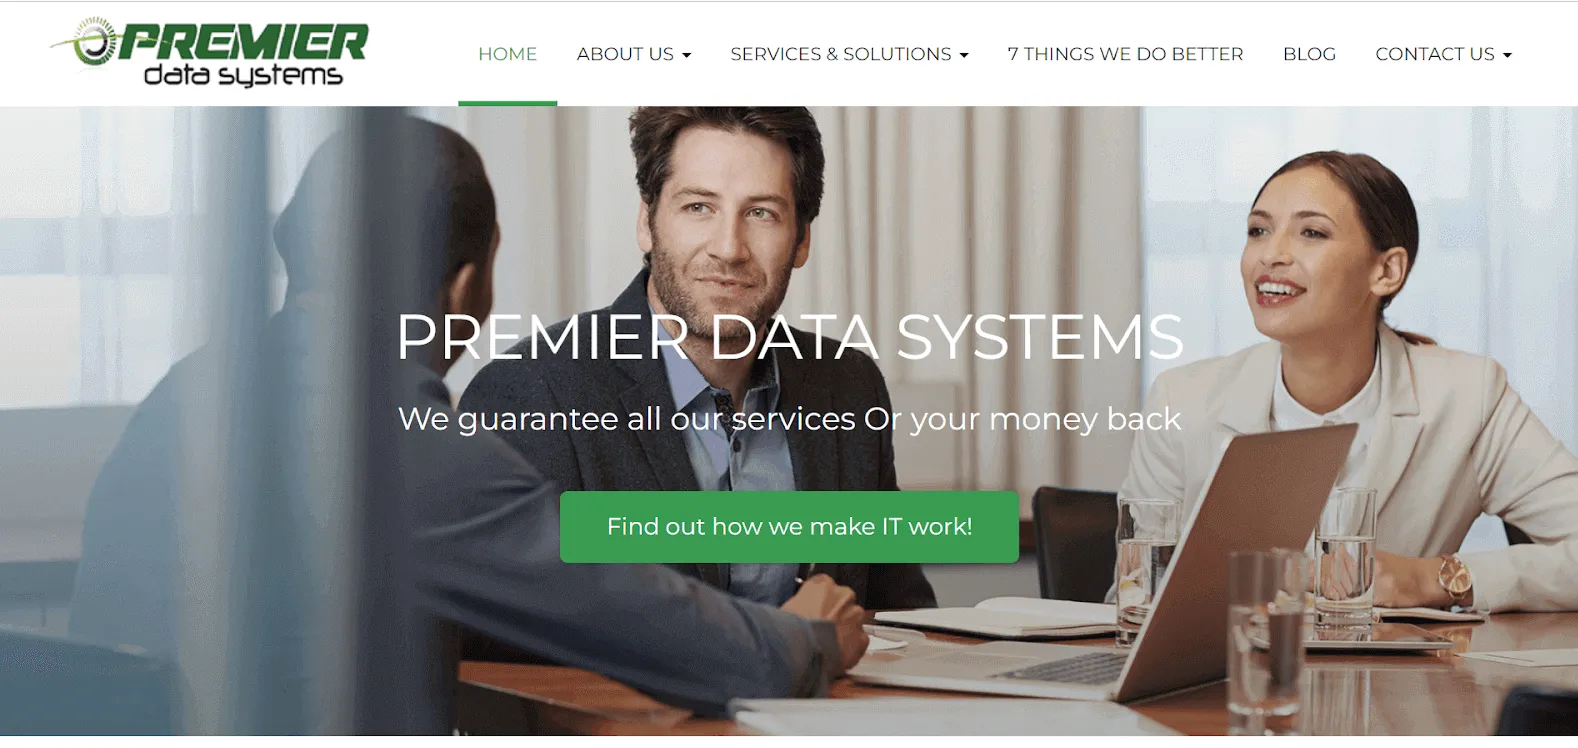 Premier Data Systems’s website